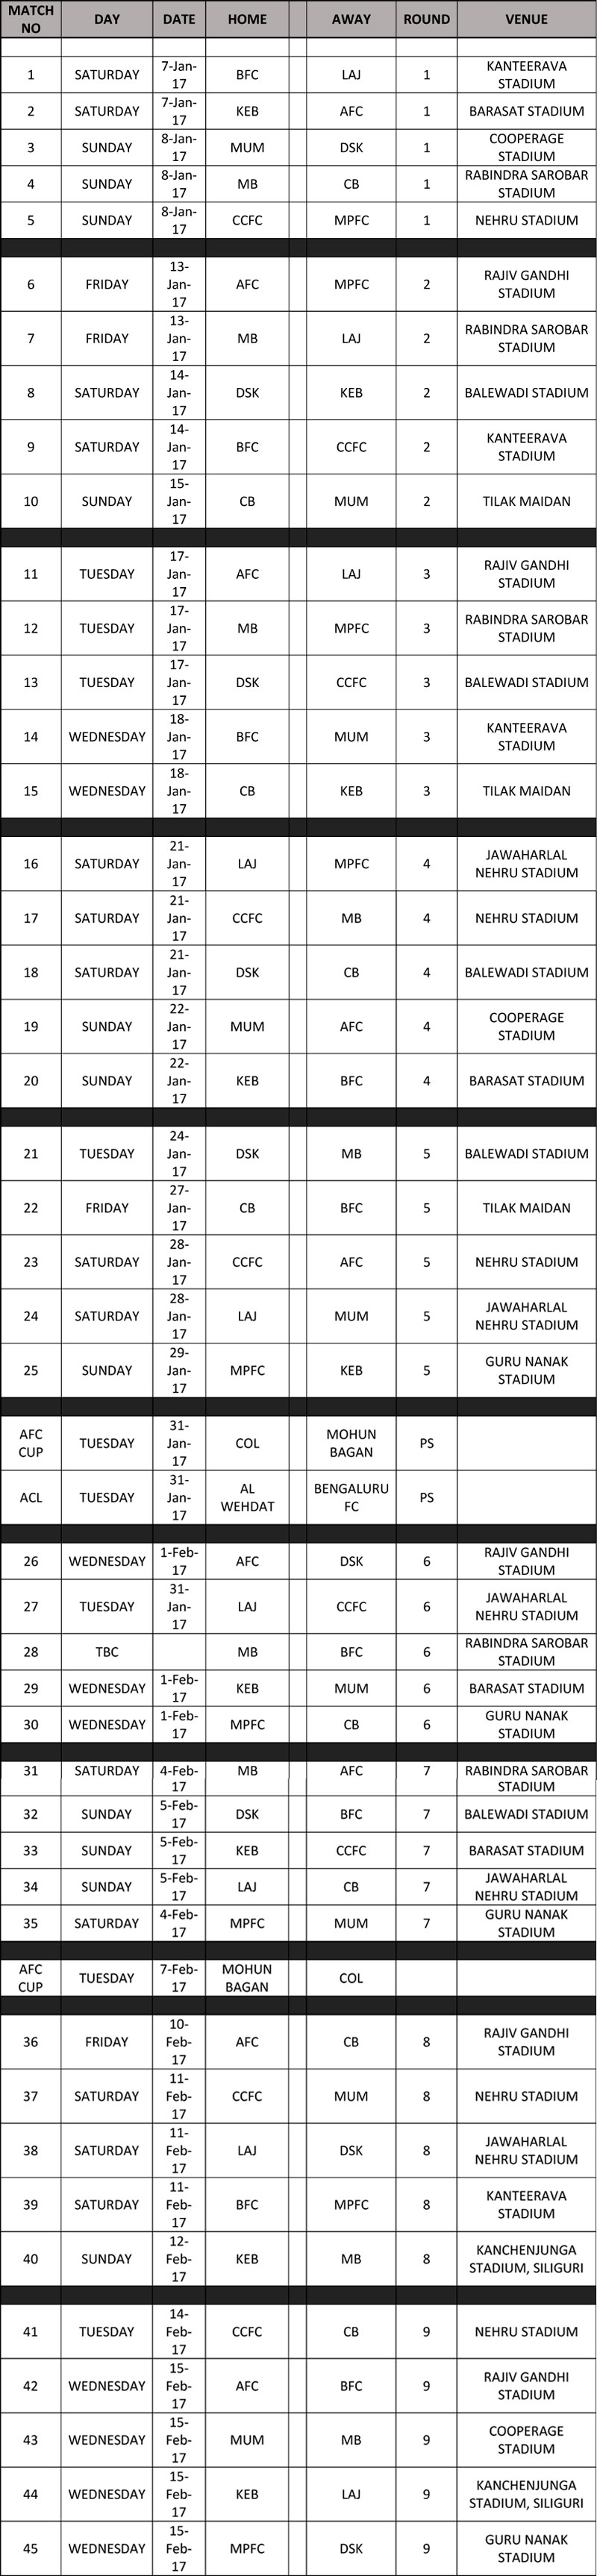 Hero I-League 2016-17 fixtures till Round 9